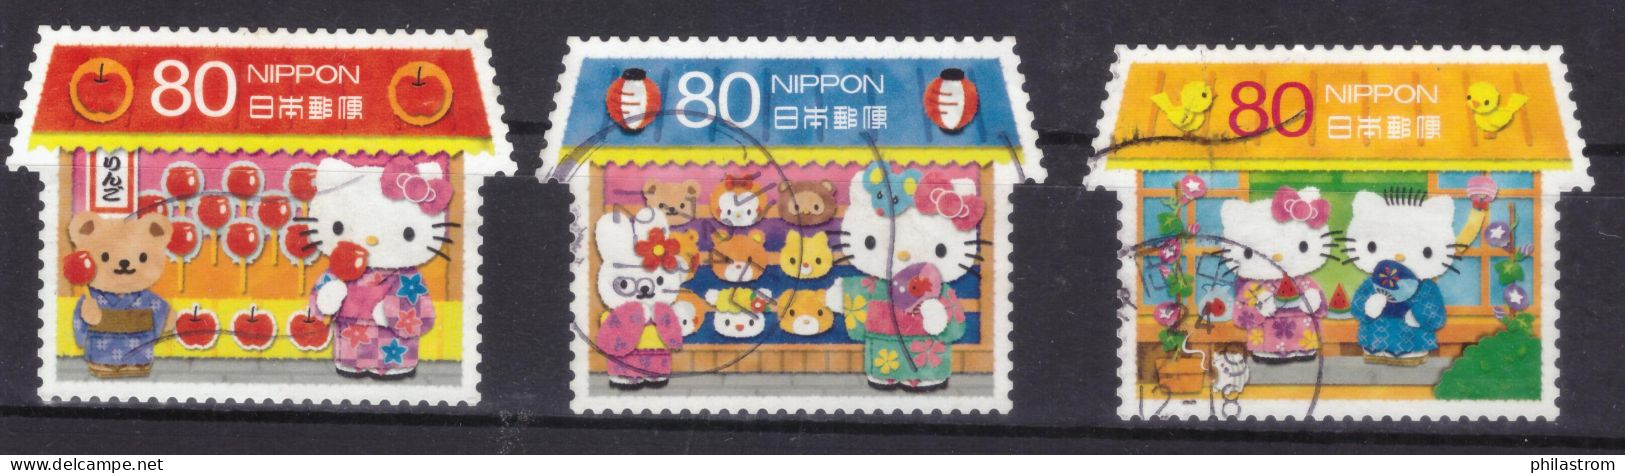 Japan - Japon - Used - Obliteré - Gestempelt - Hello Kitty (NPPN-0738) - Usati